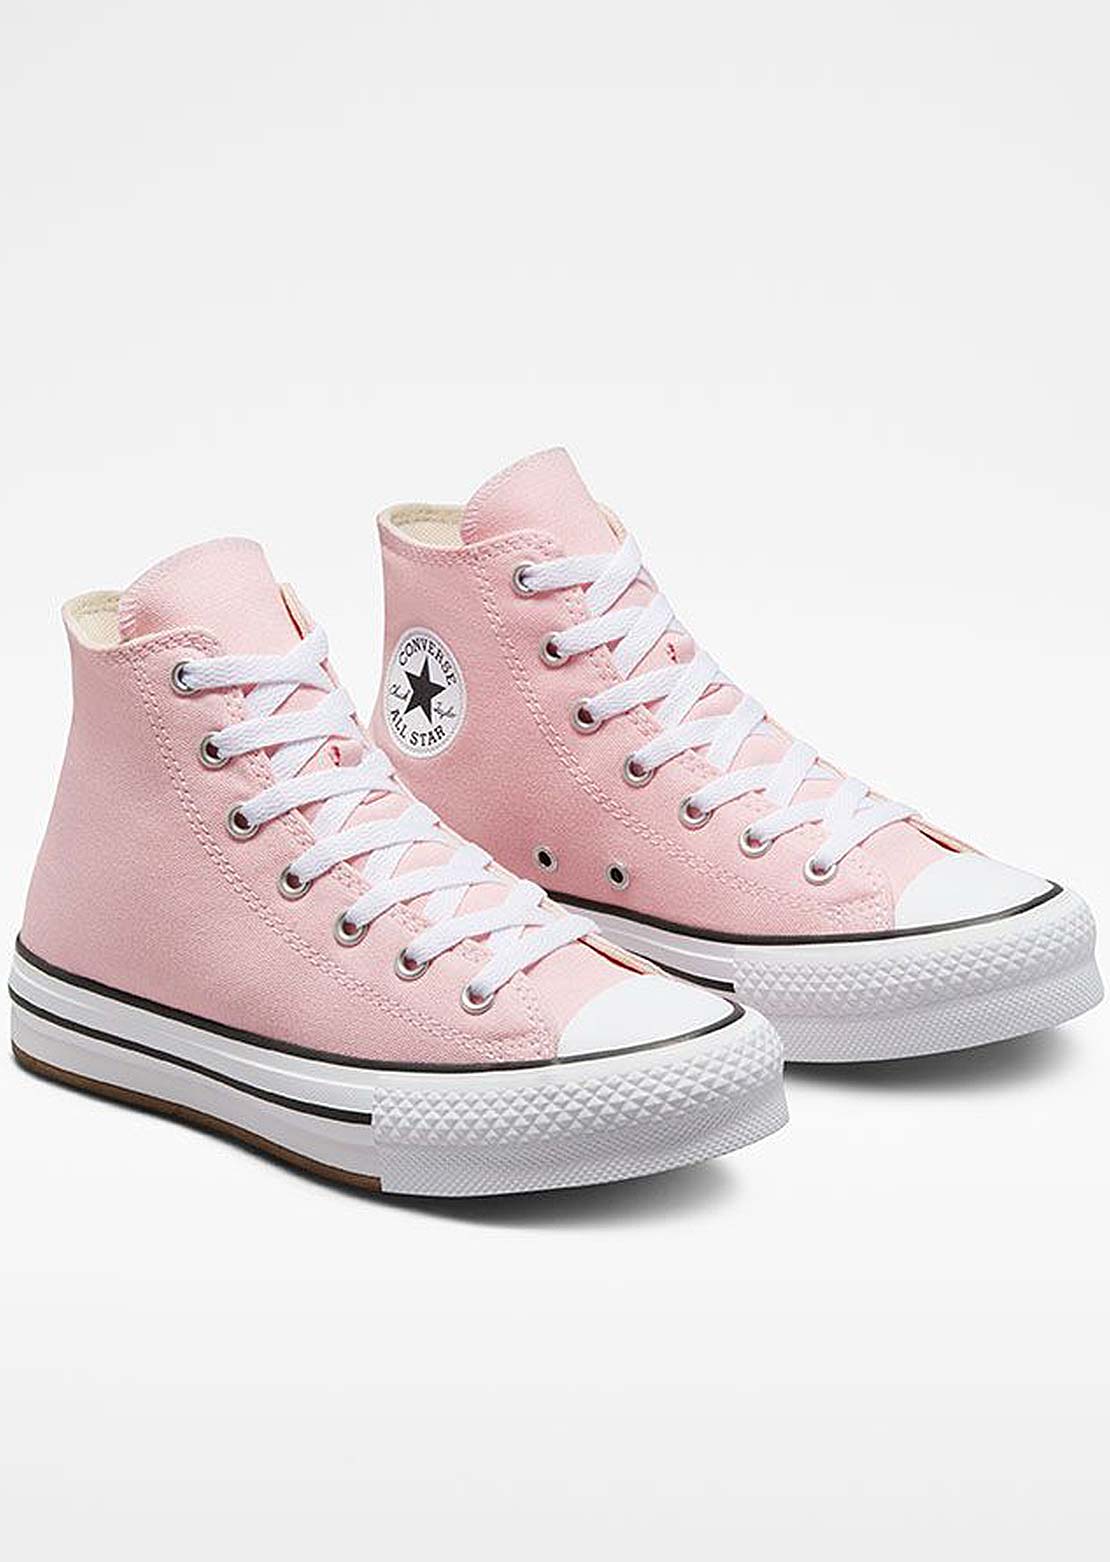 Converse Junior Chuck Taylor All Star Eva Lift Platform Shoes Sunrise Pink/White/Black